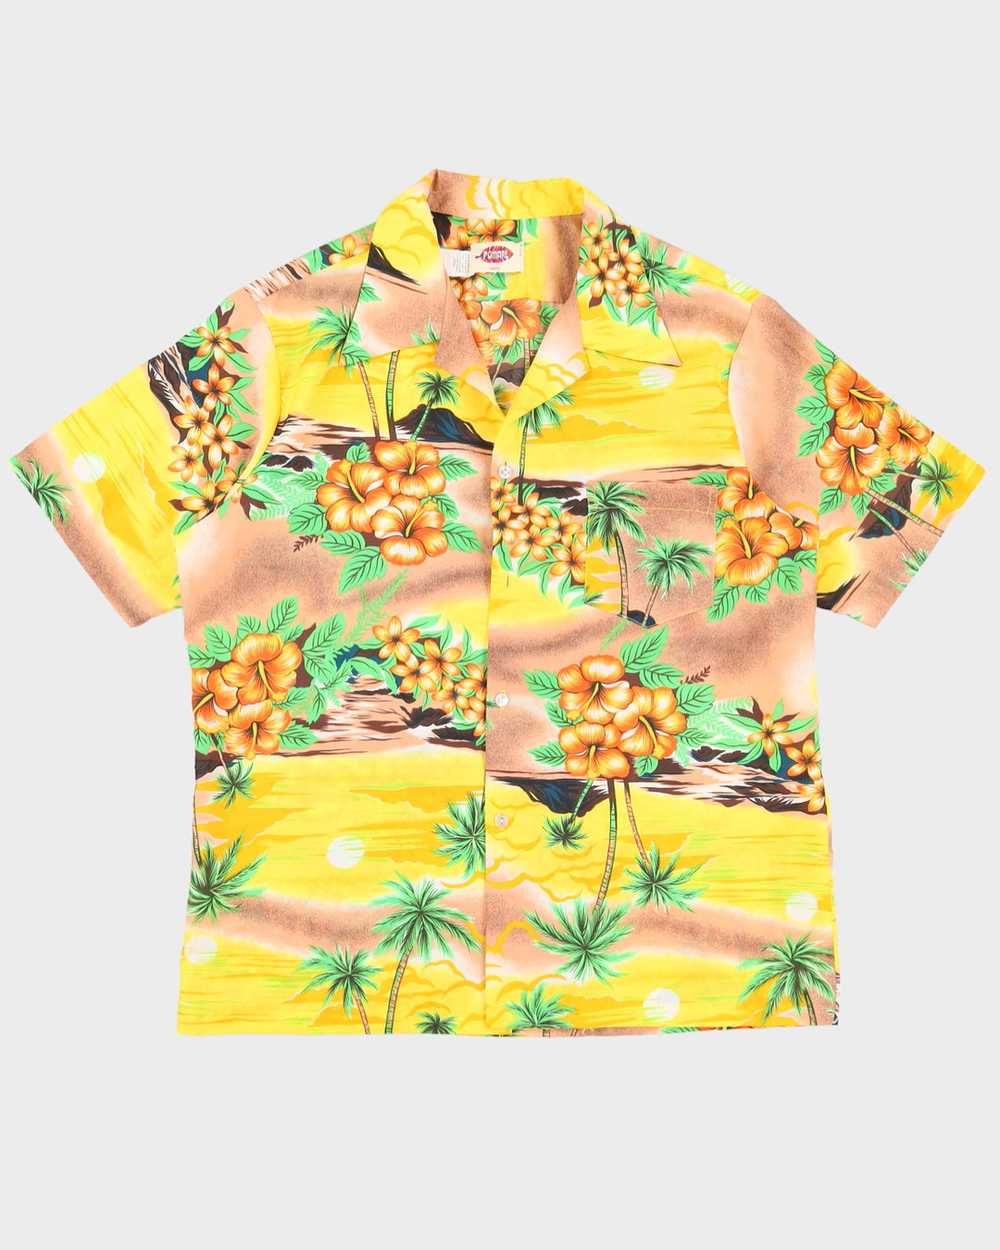 Vintage 60s Pomare Hawaiian Shirt - XL - image 1